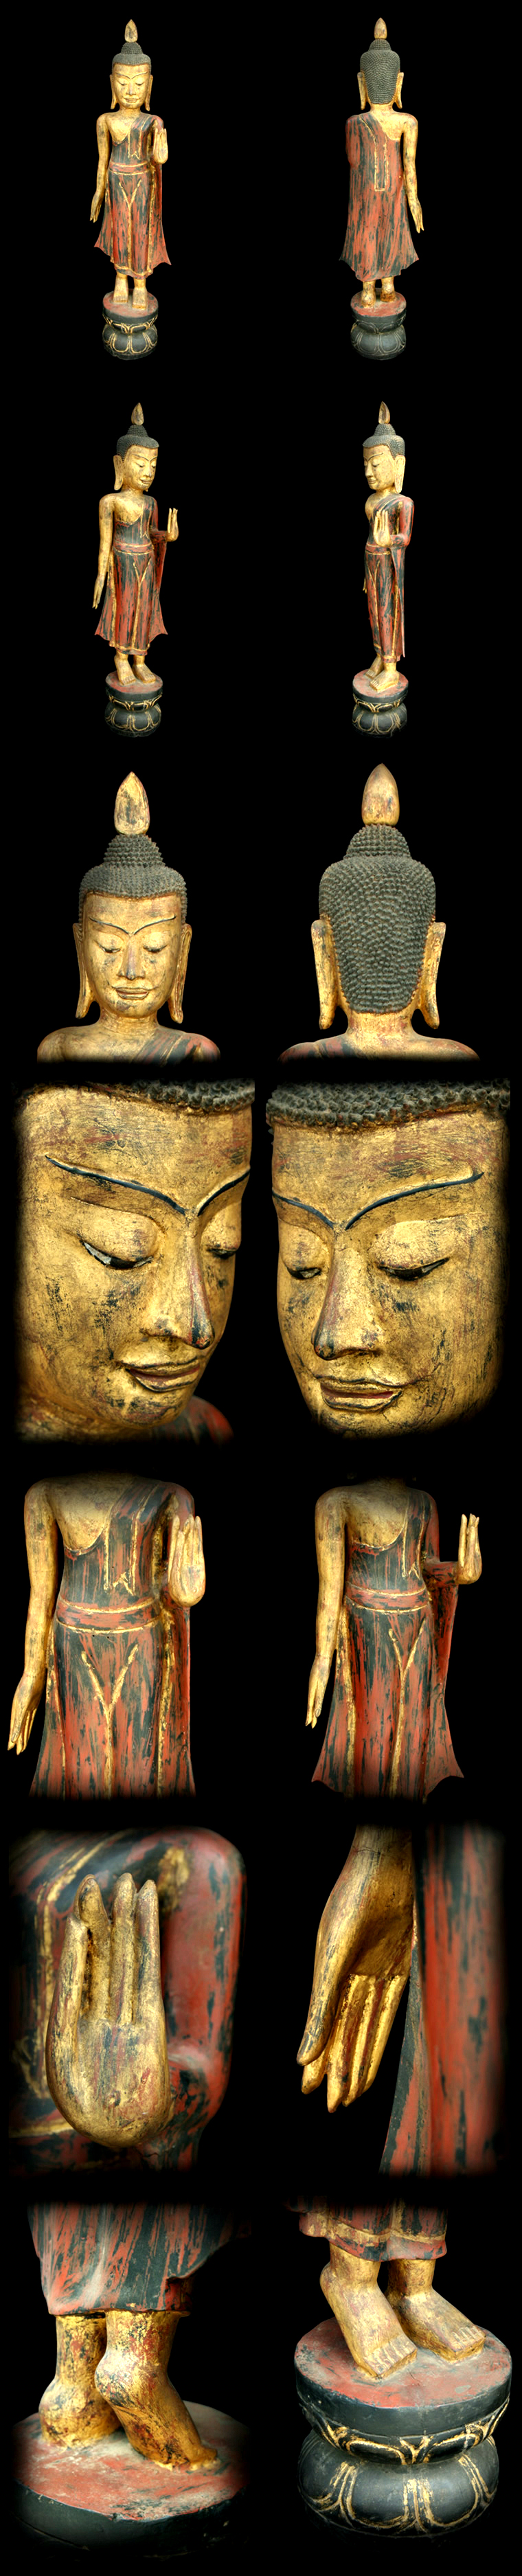 Extremely Rare 18C Wood Walking Laos Buddha #087-2